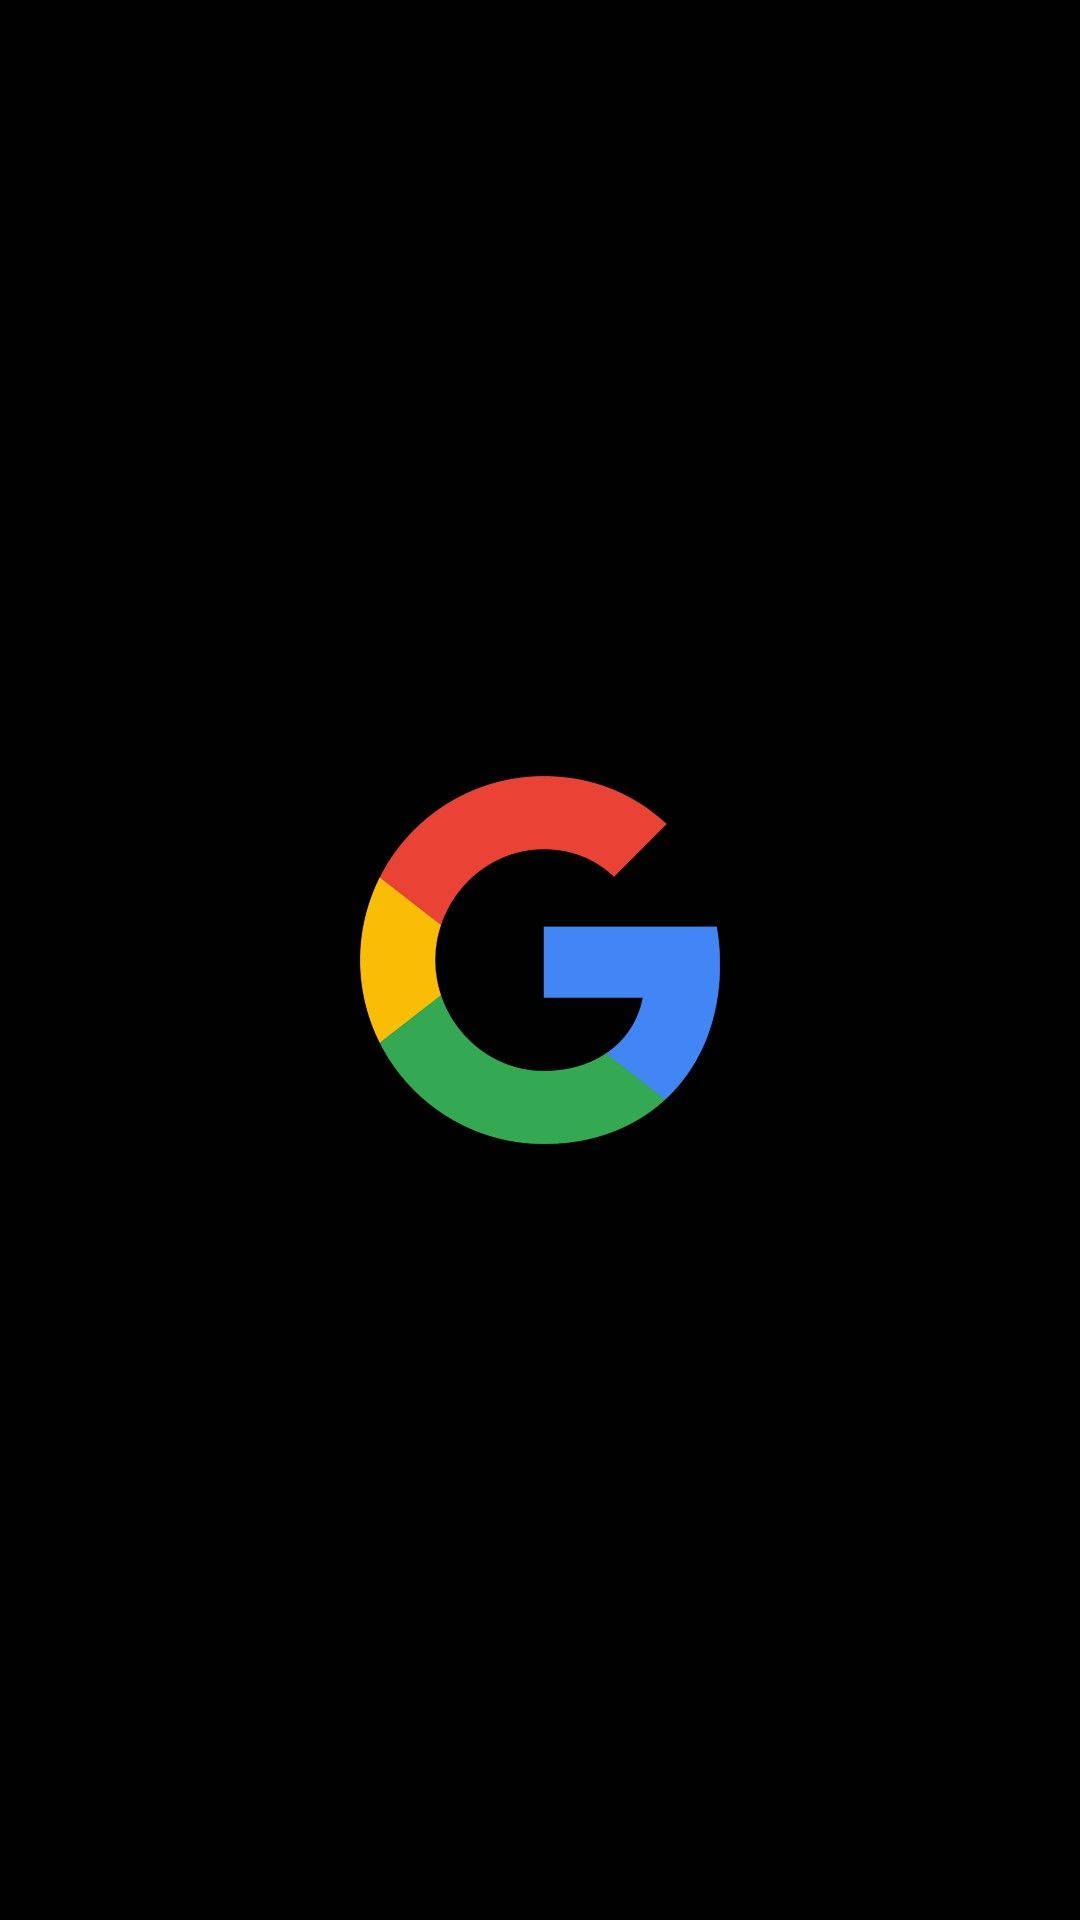 Google G Logo On Black Background